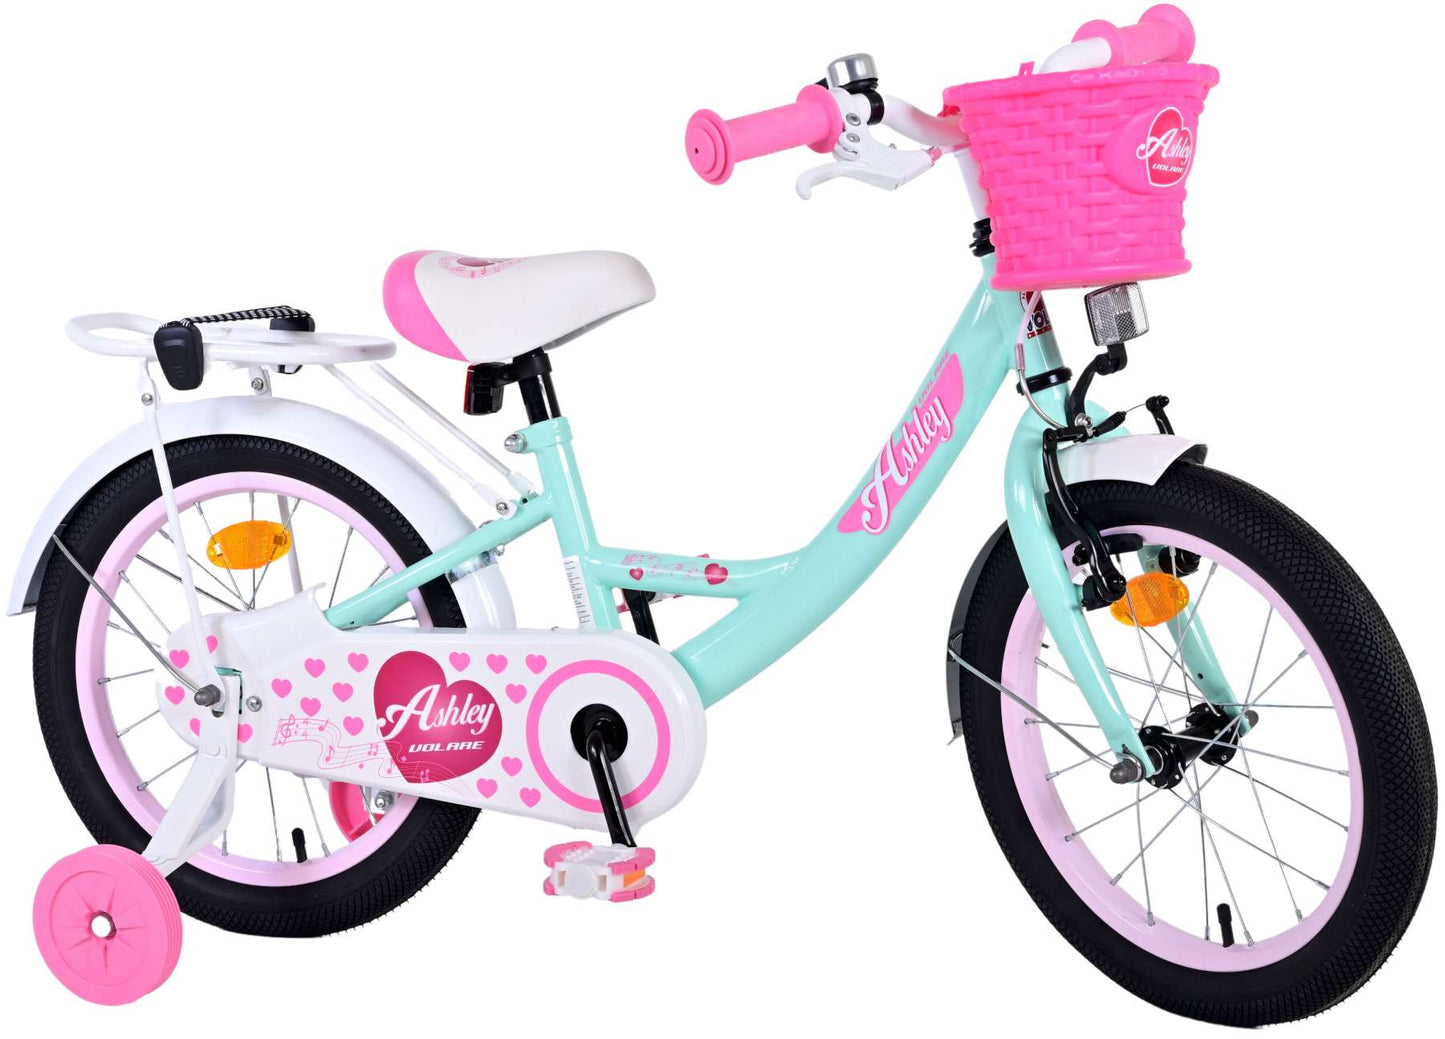 Bicicleta para niños de Vinare Ashley - Niñas - 16 pulgadas - Verde